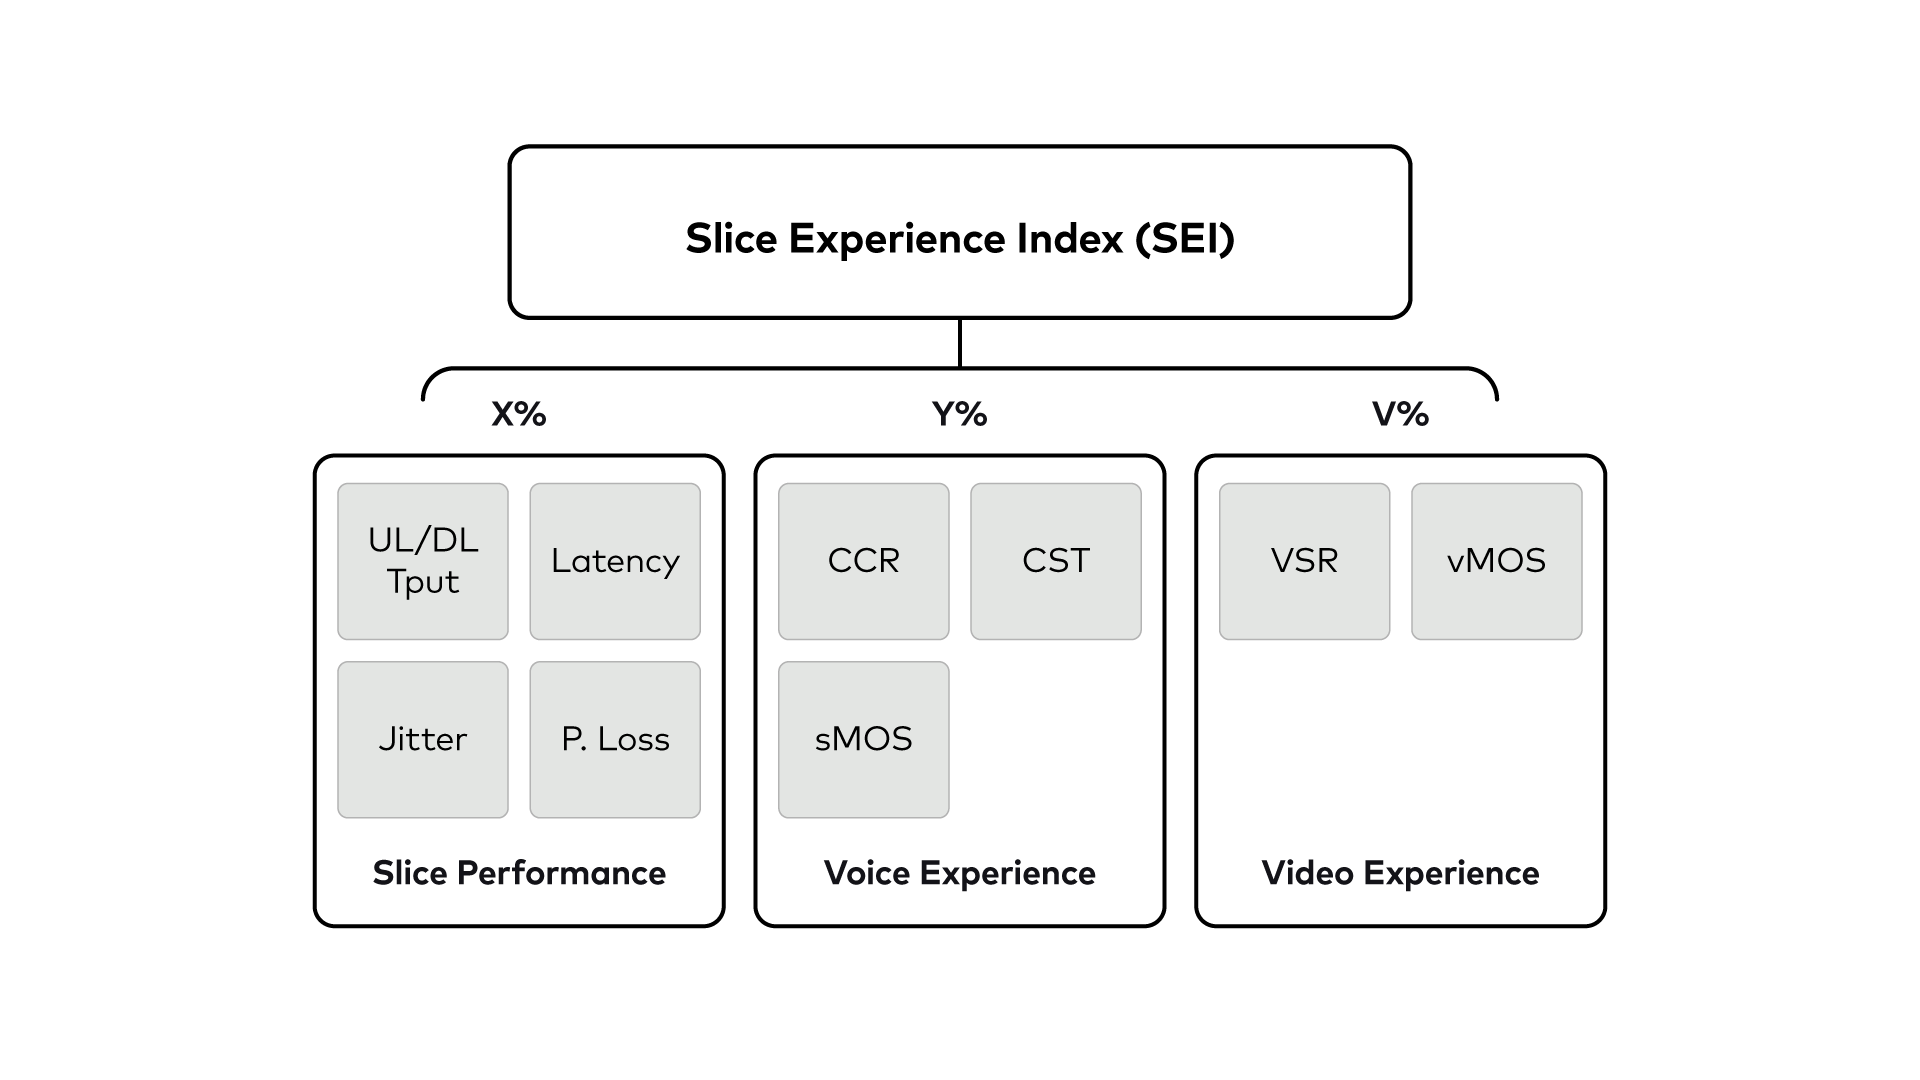 Slice Experience Index